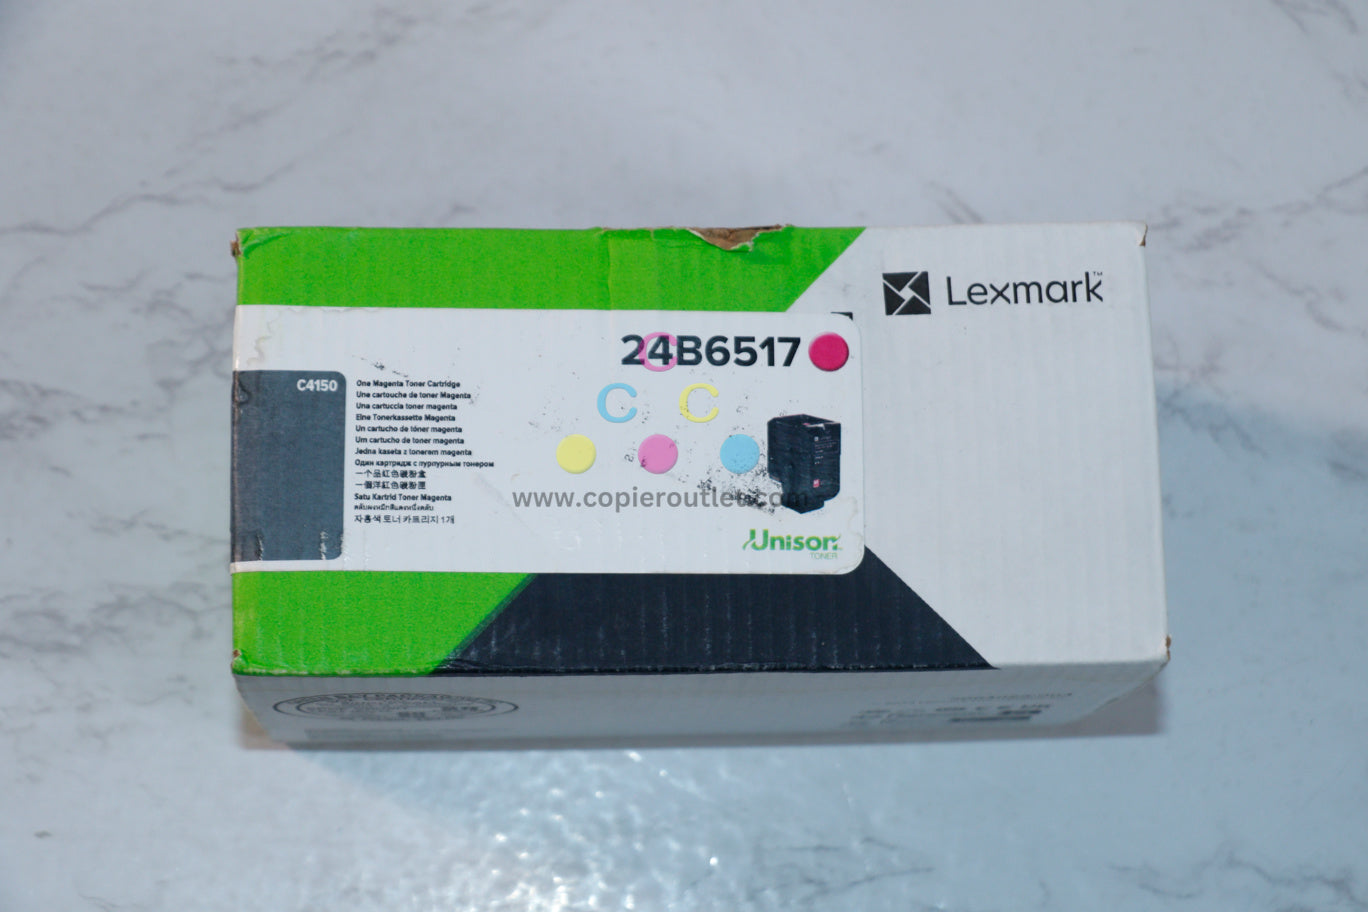 Cosmetic OEM Lexmark C4150 Magenta Toner Cartridge 24B6517 (Water Damaged Box)